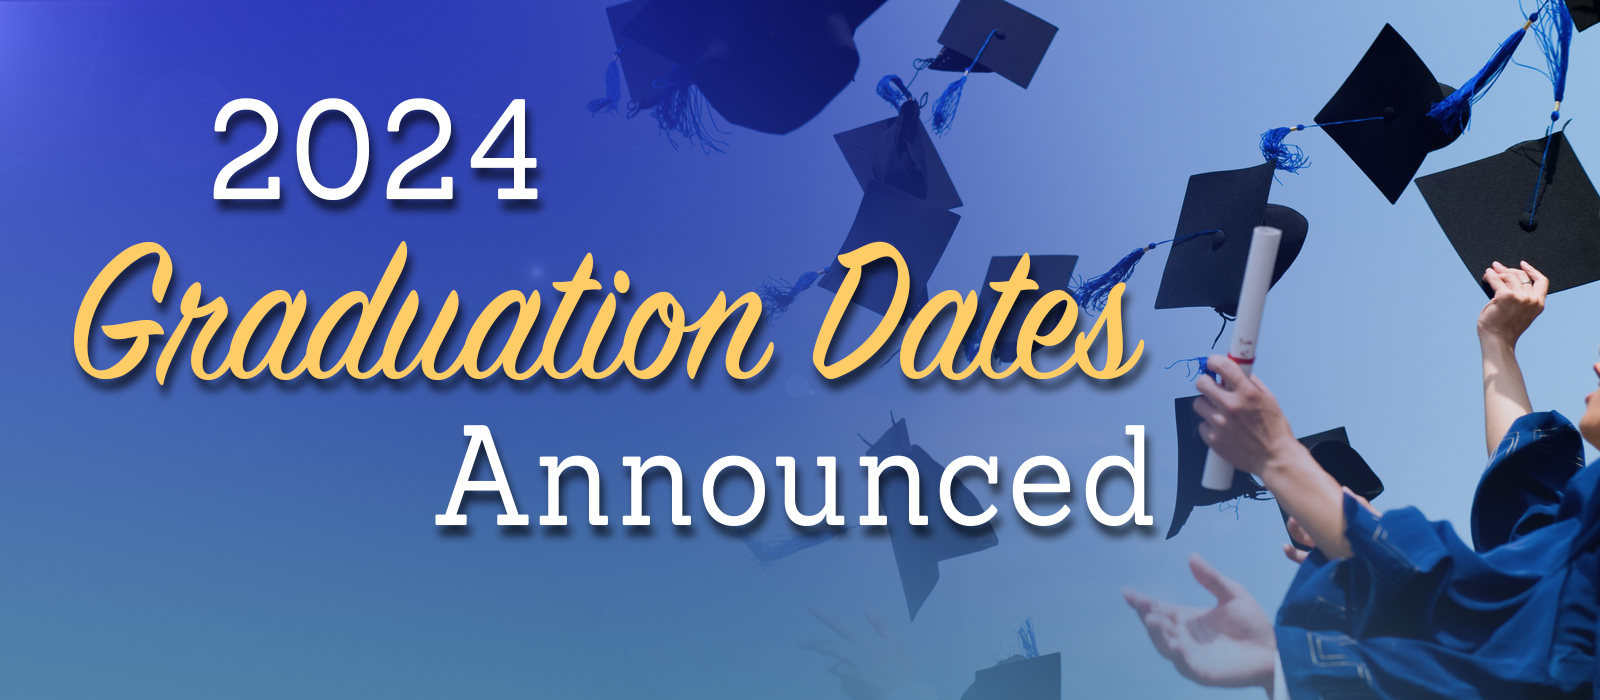 Graduation dates announced